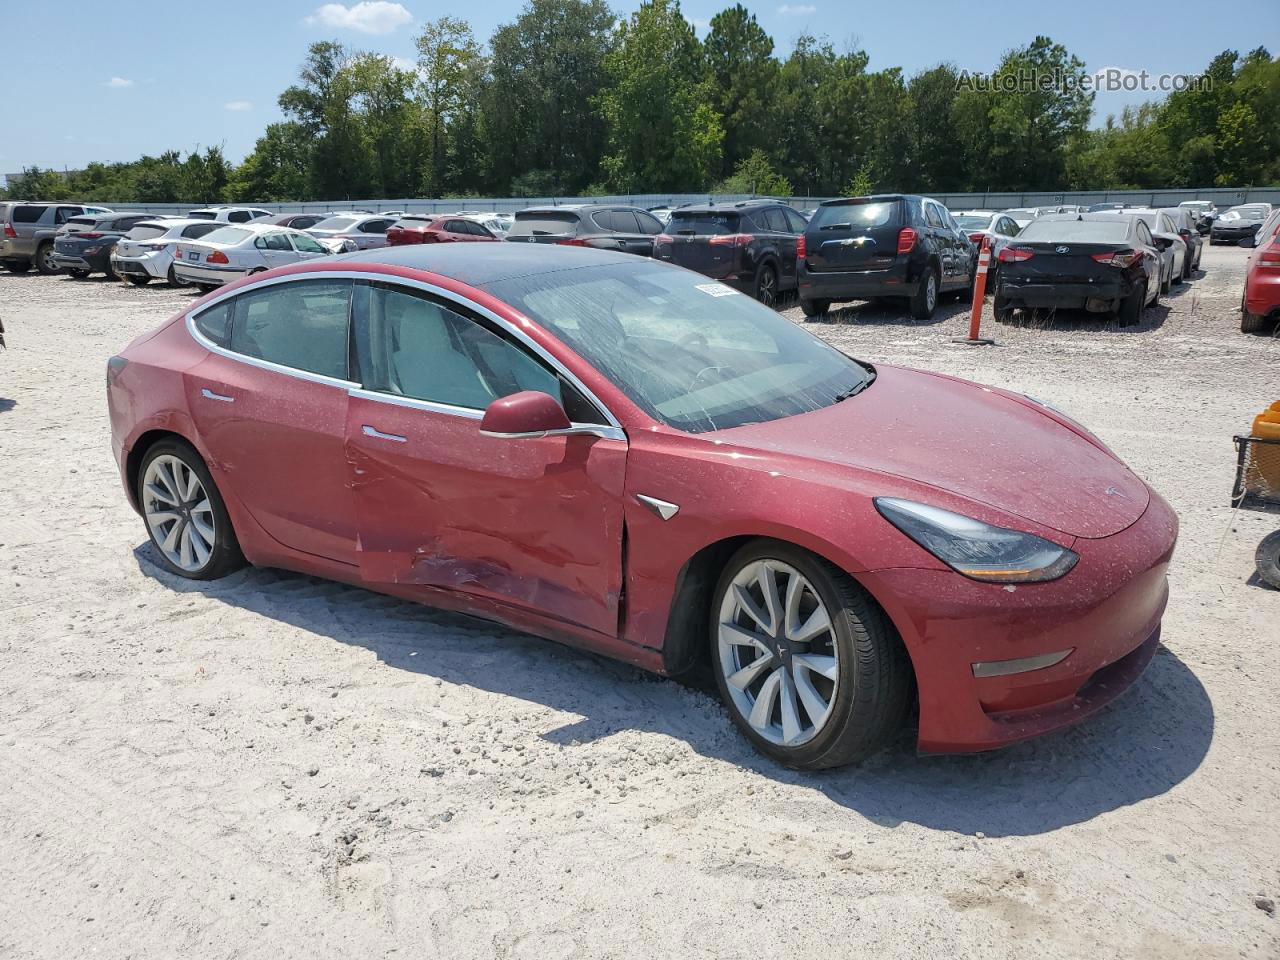 2020 Tesla Model 3  Красный vin: 5YJ3E1EB8LF537185